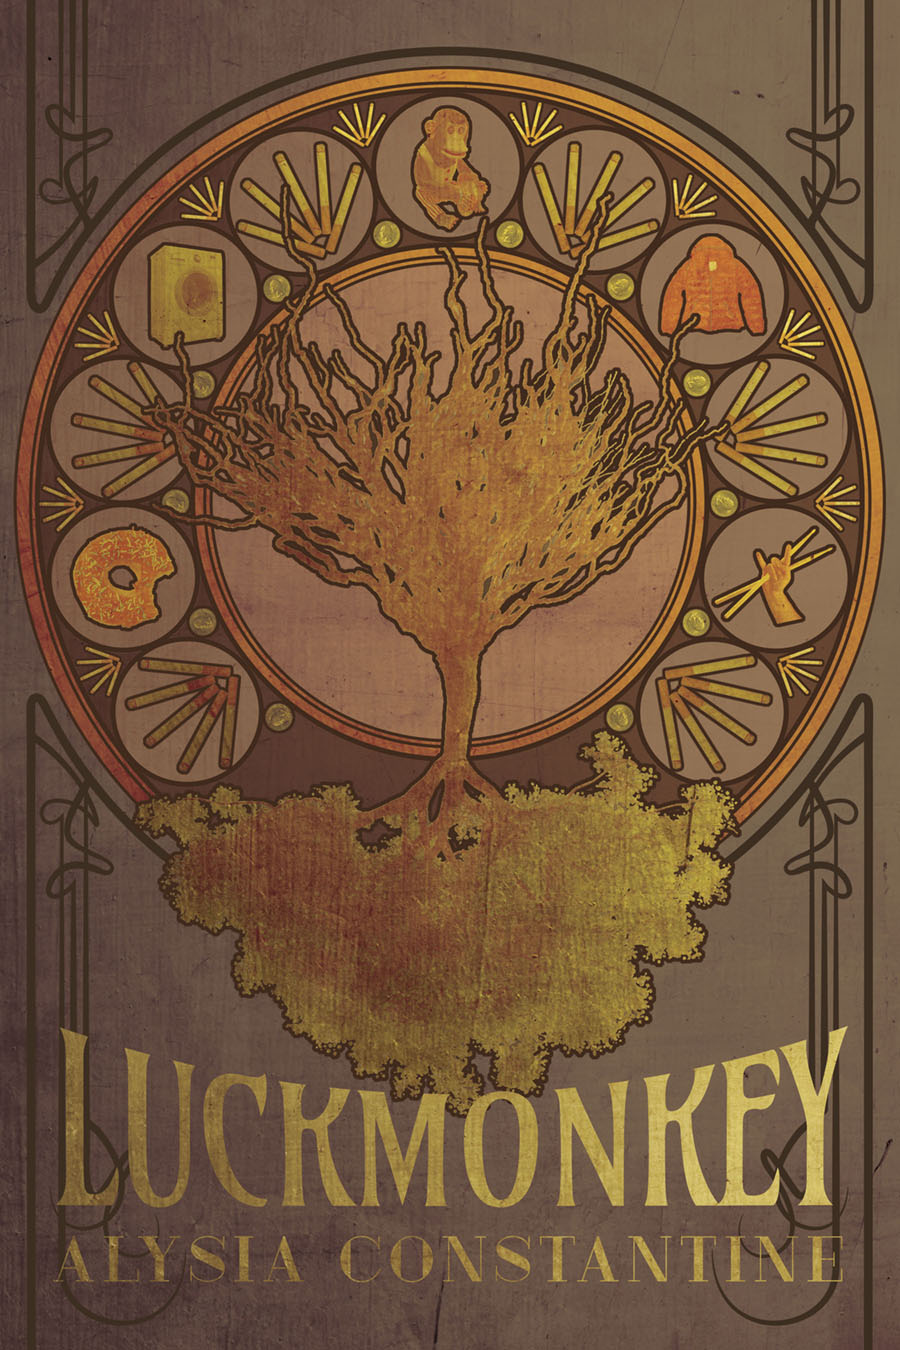 Luckmonkey (ebook edition)